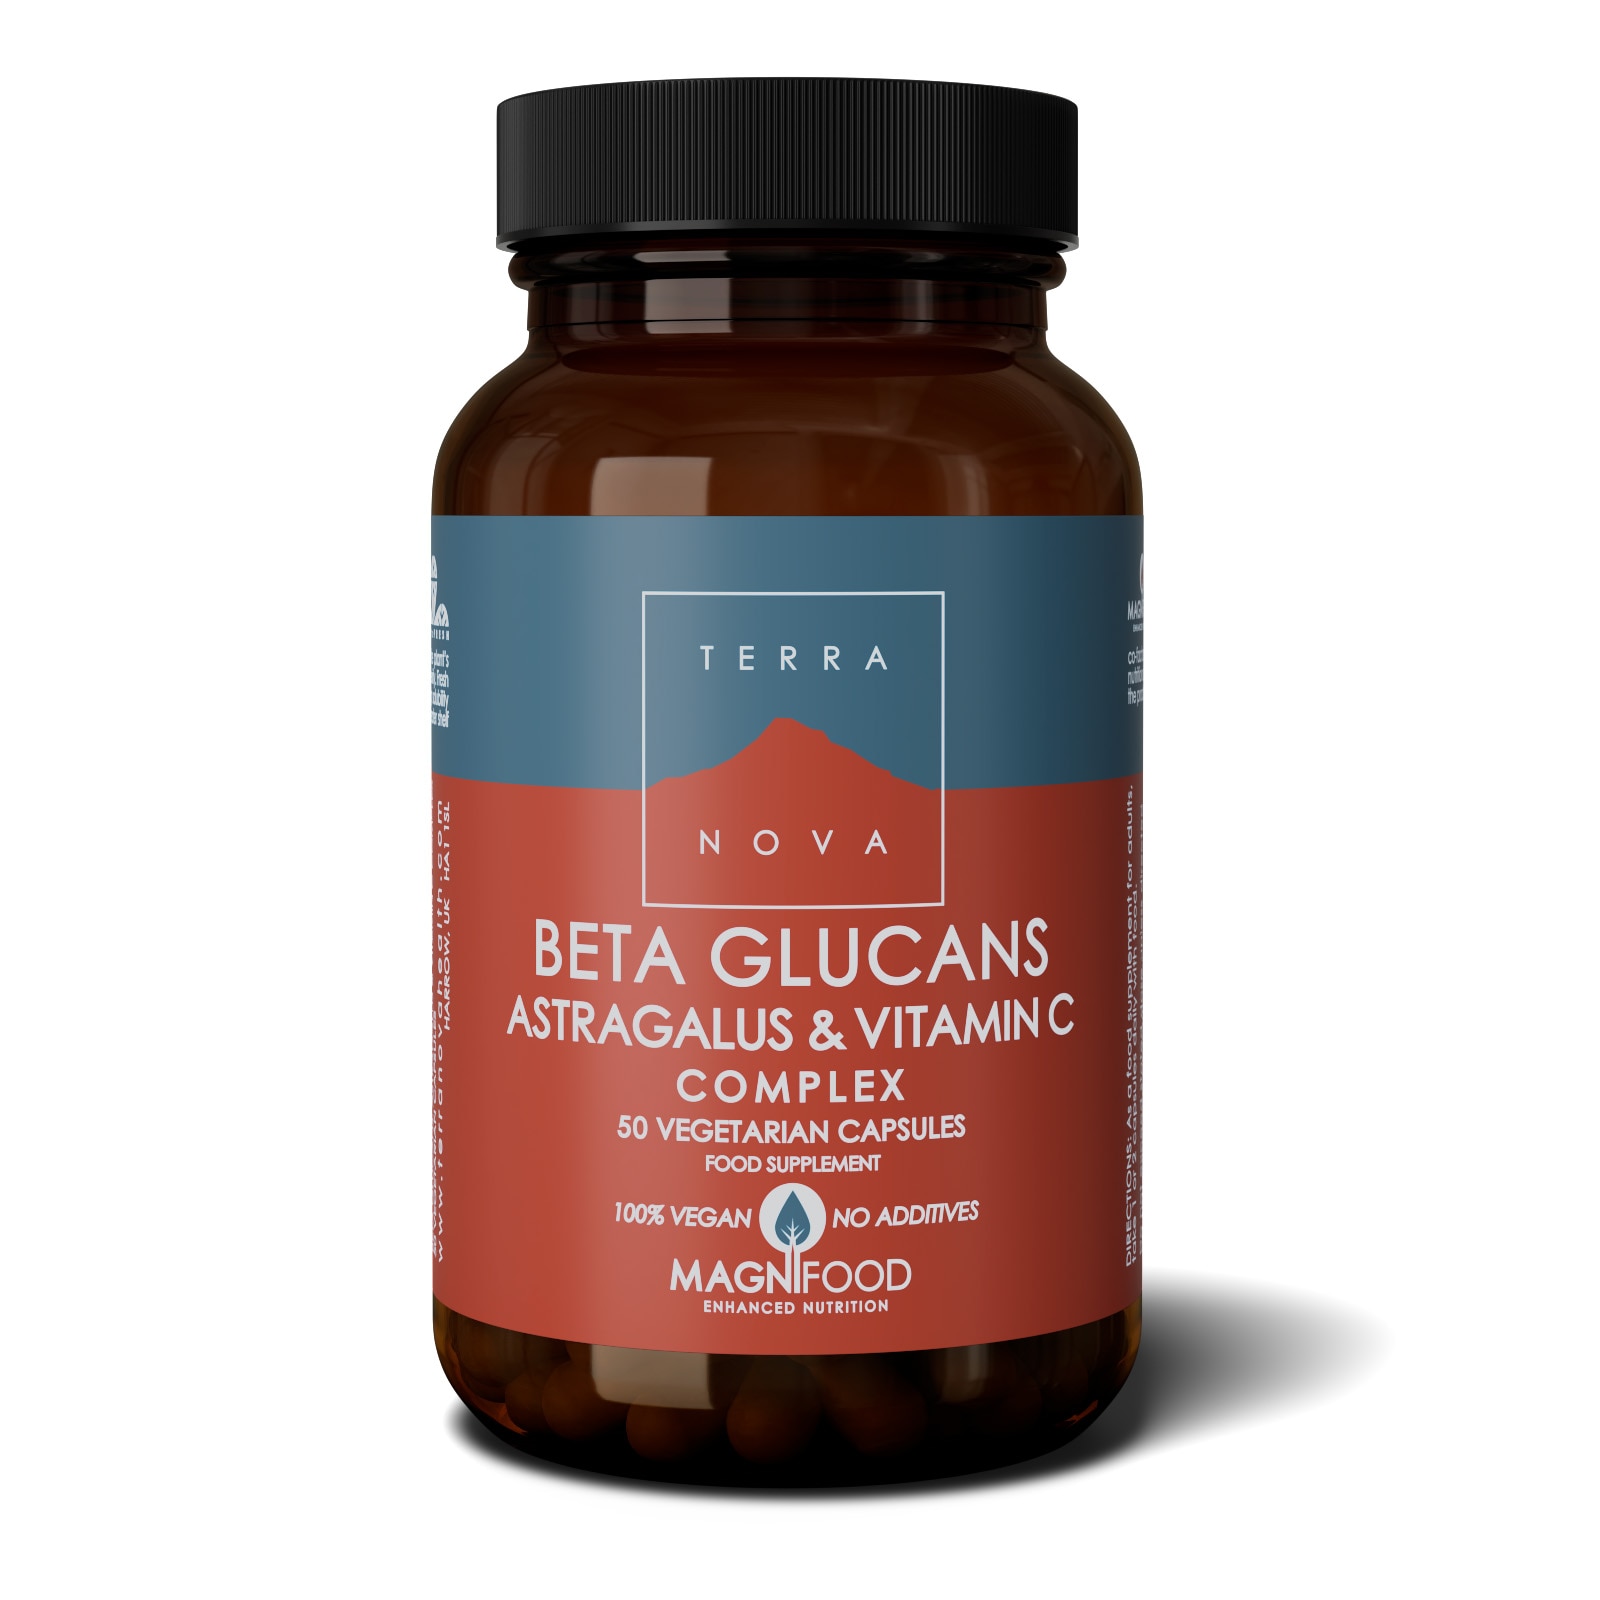 Betaglucans-Astragalus-Vitamin C Complex